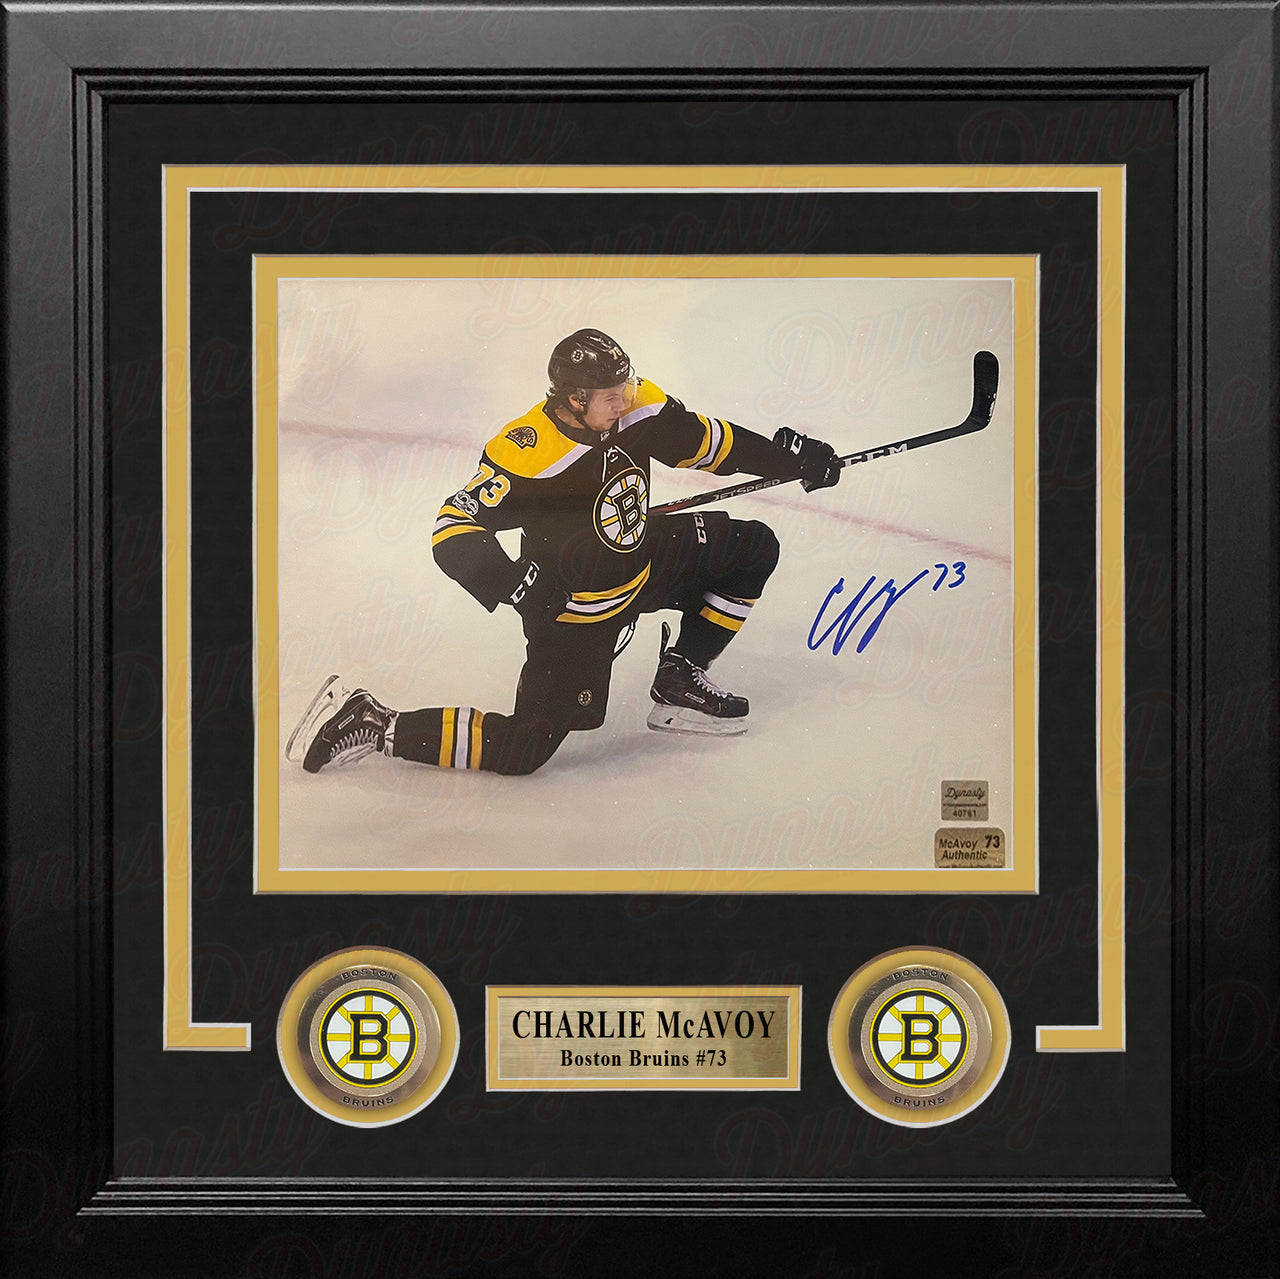 Charlie McAvoy Fist Pump Boston Bruins Autographed 8" x 10" Framed Hockey Photo